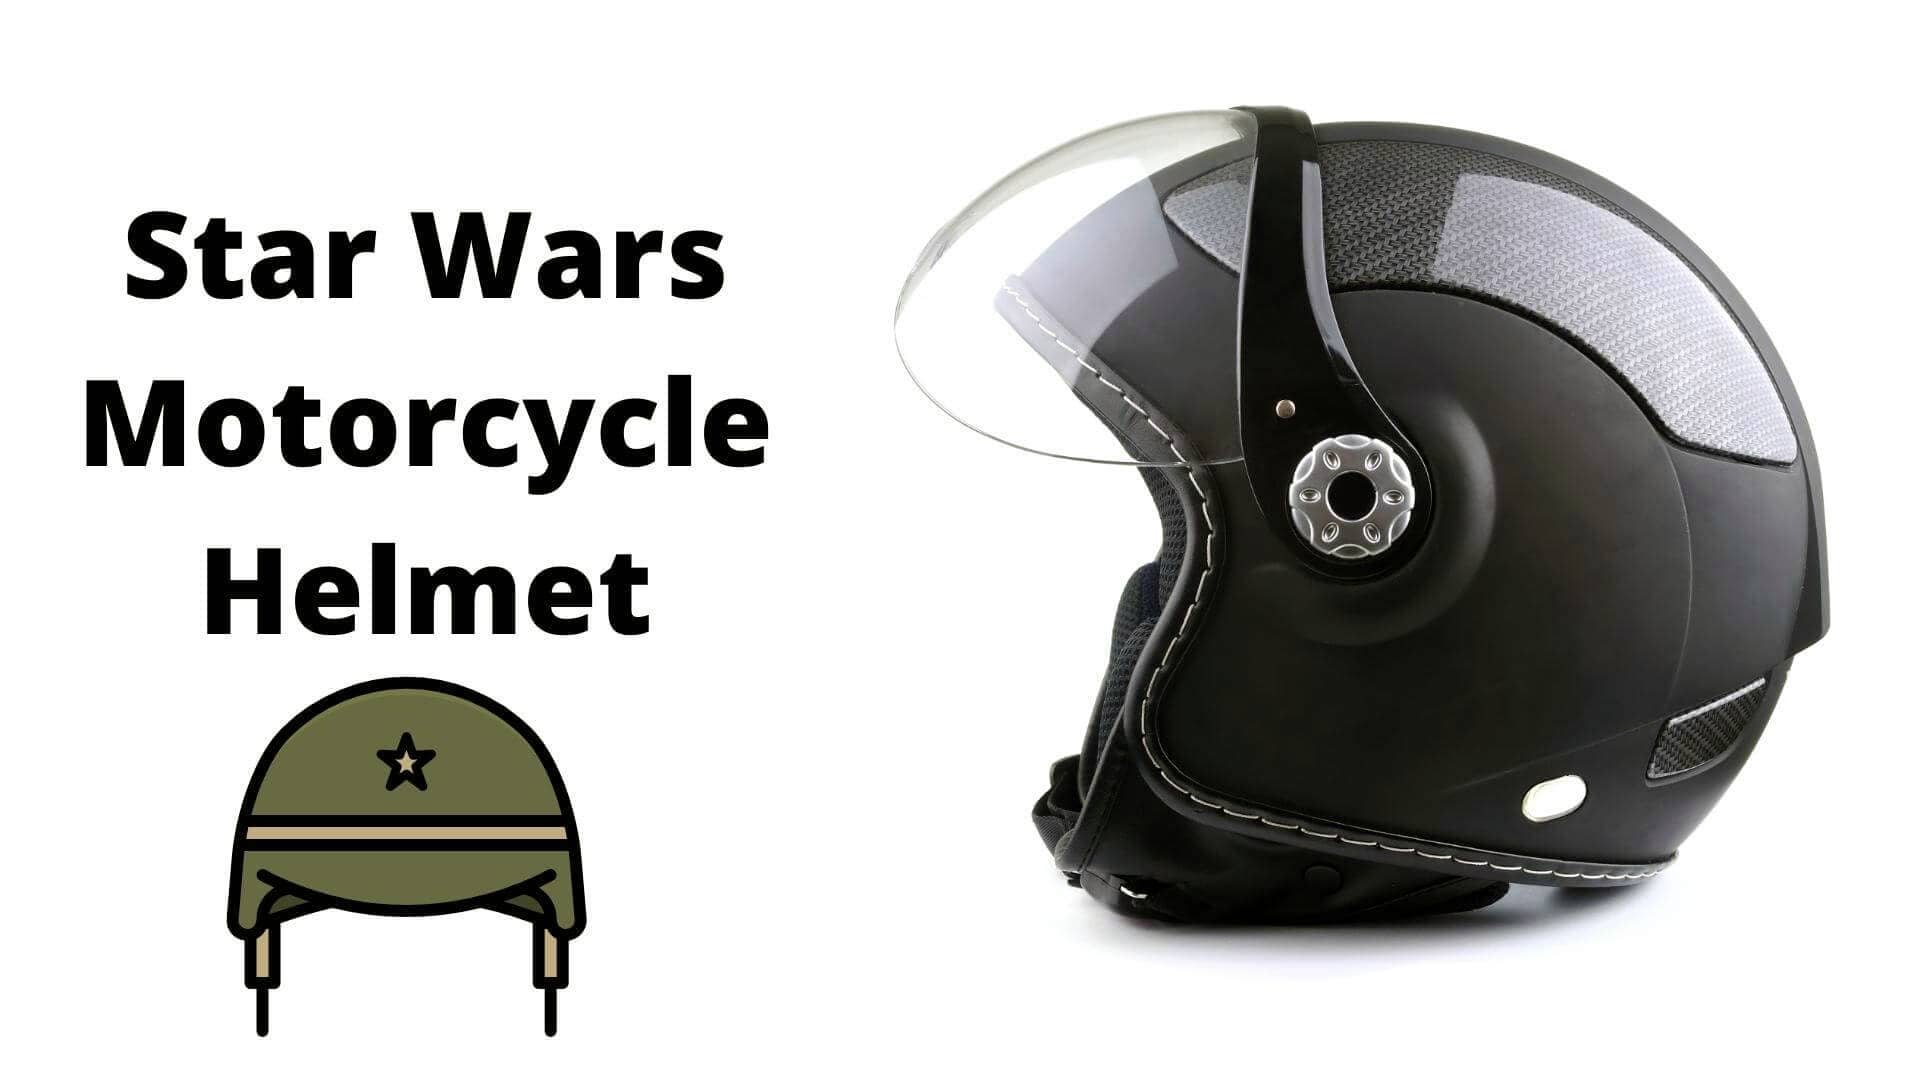 Star Wars Motorcycle Helmet For Star Wars Fans!